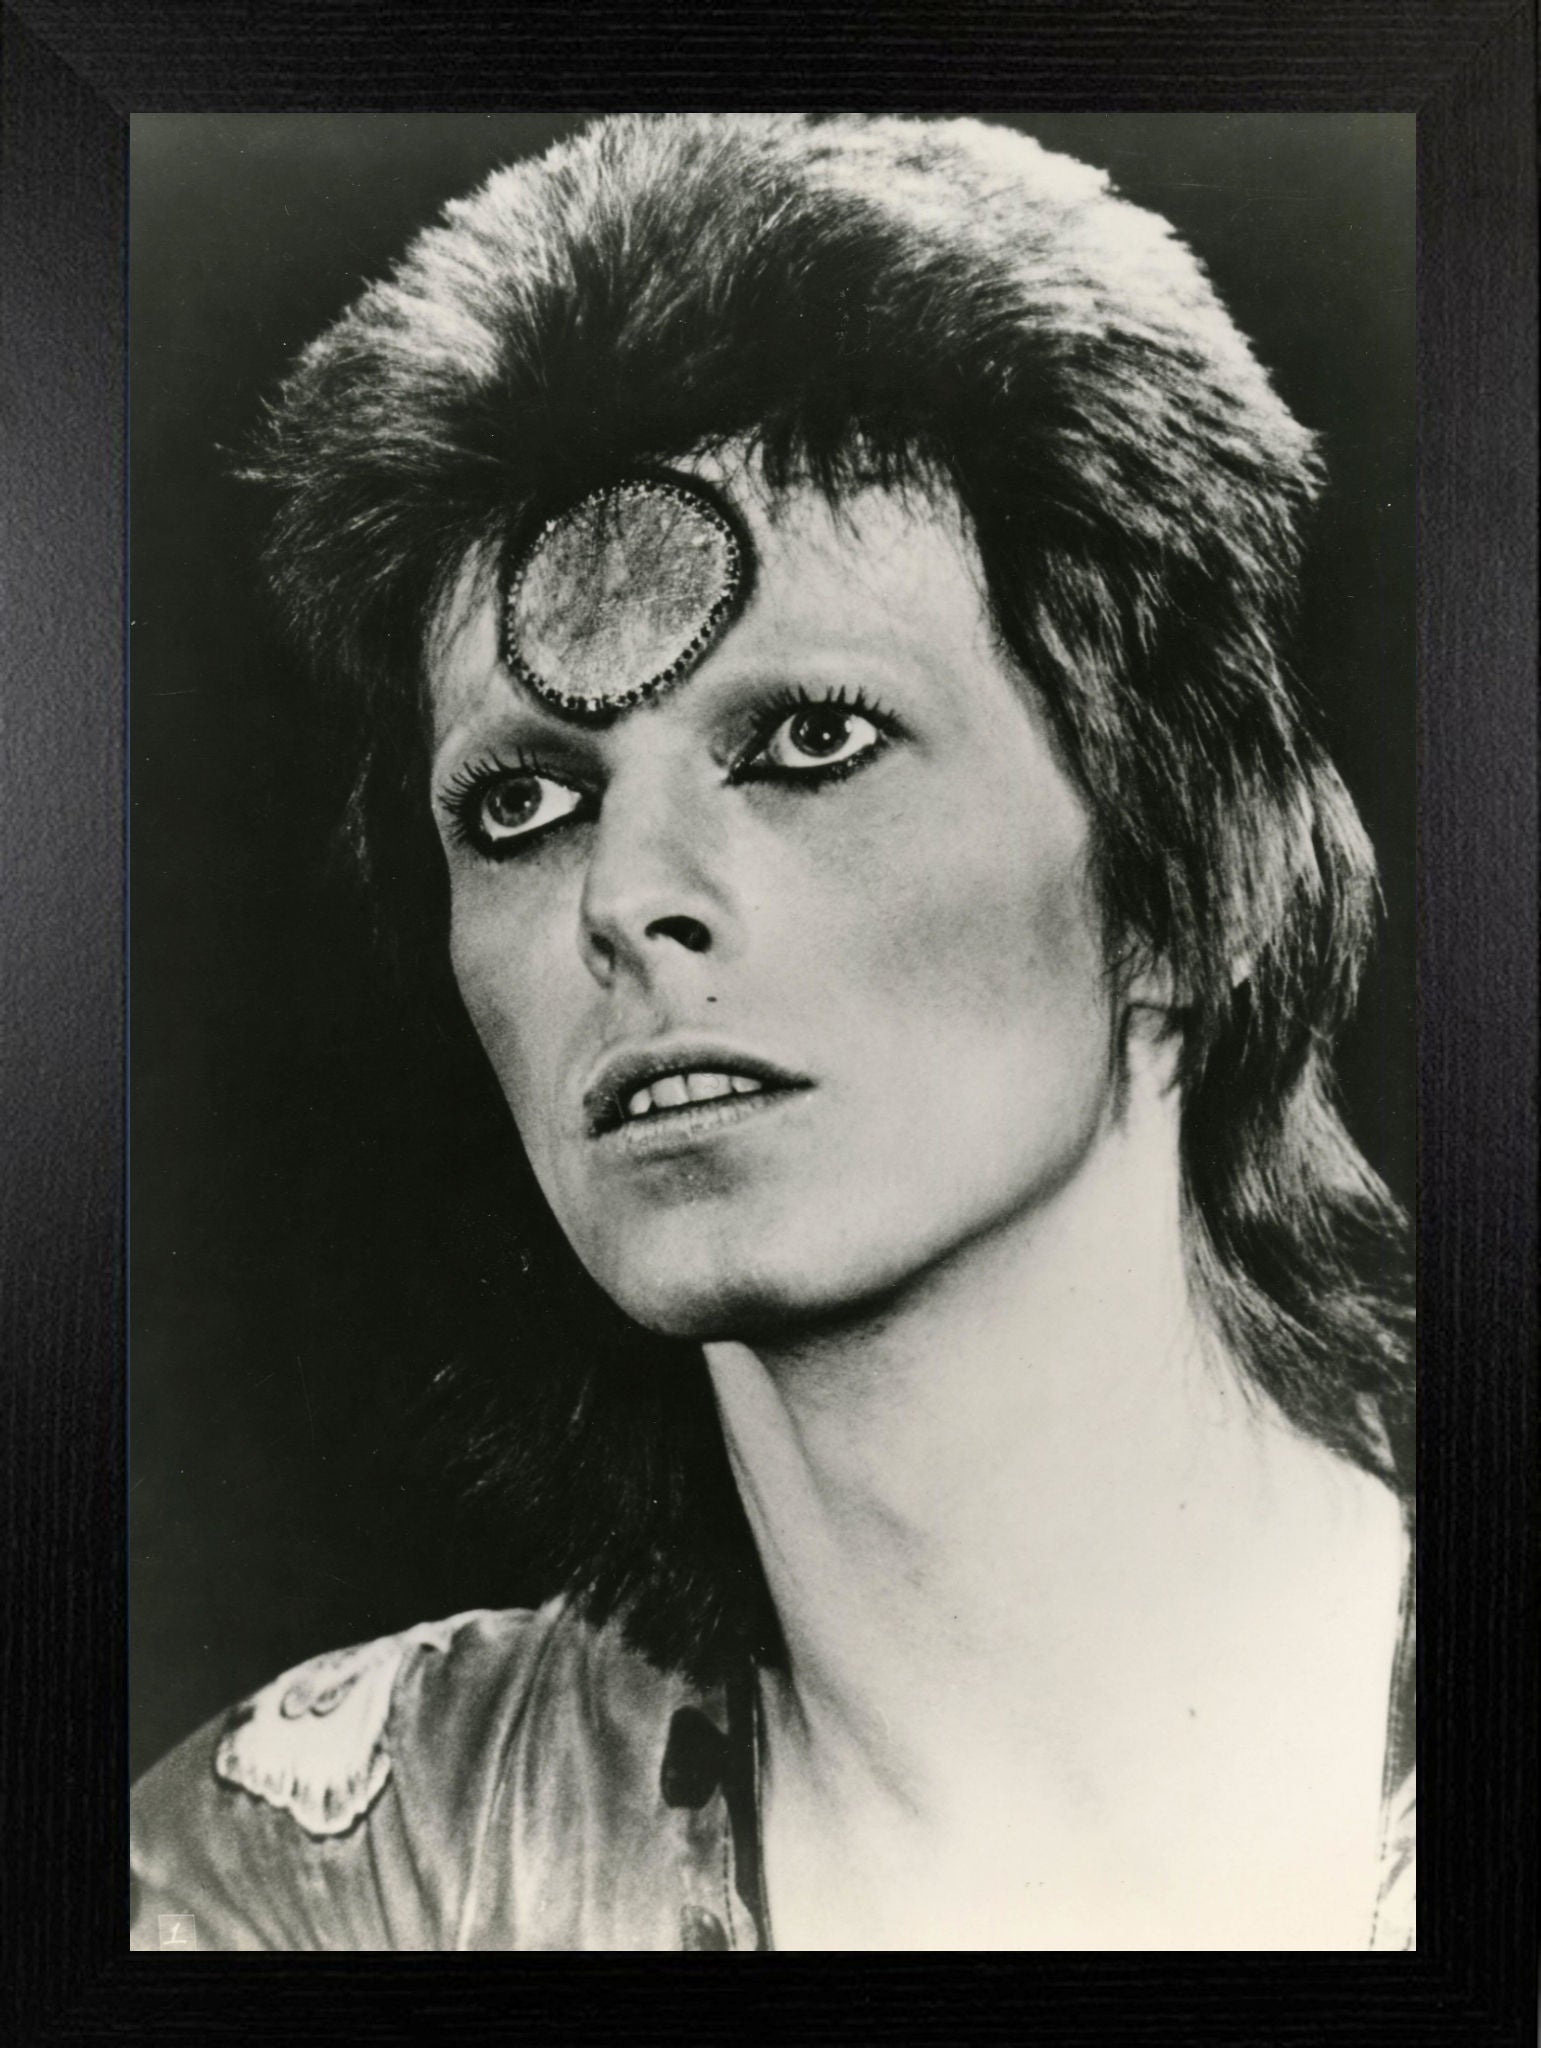 David Bowie - Ziggy Stardust - A3 Framed Poster